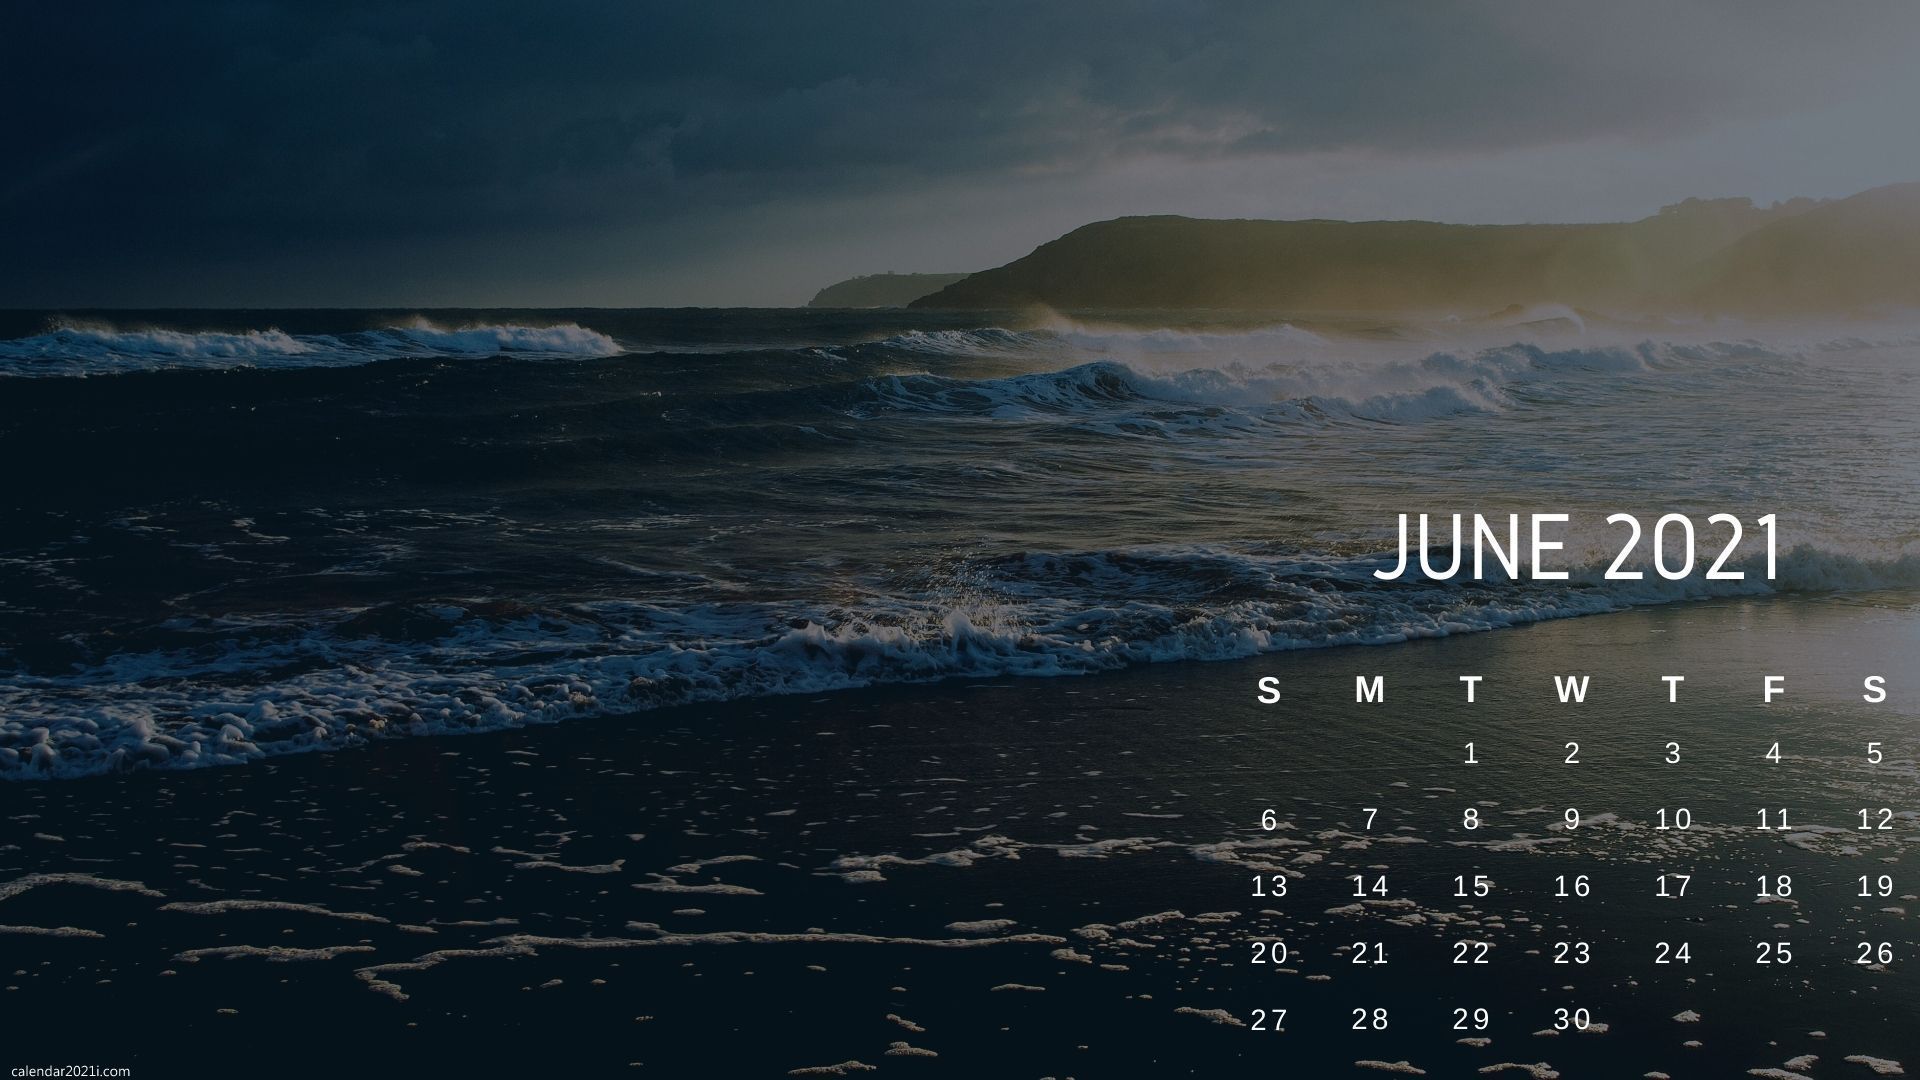 June 2021 Calendar Nature HD Wallpaper. HD nature wallpaper, Calendar wallpaper, 2021 calendar